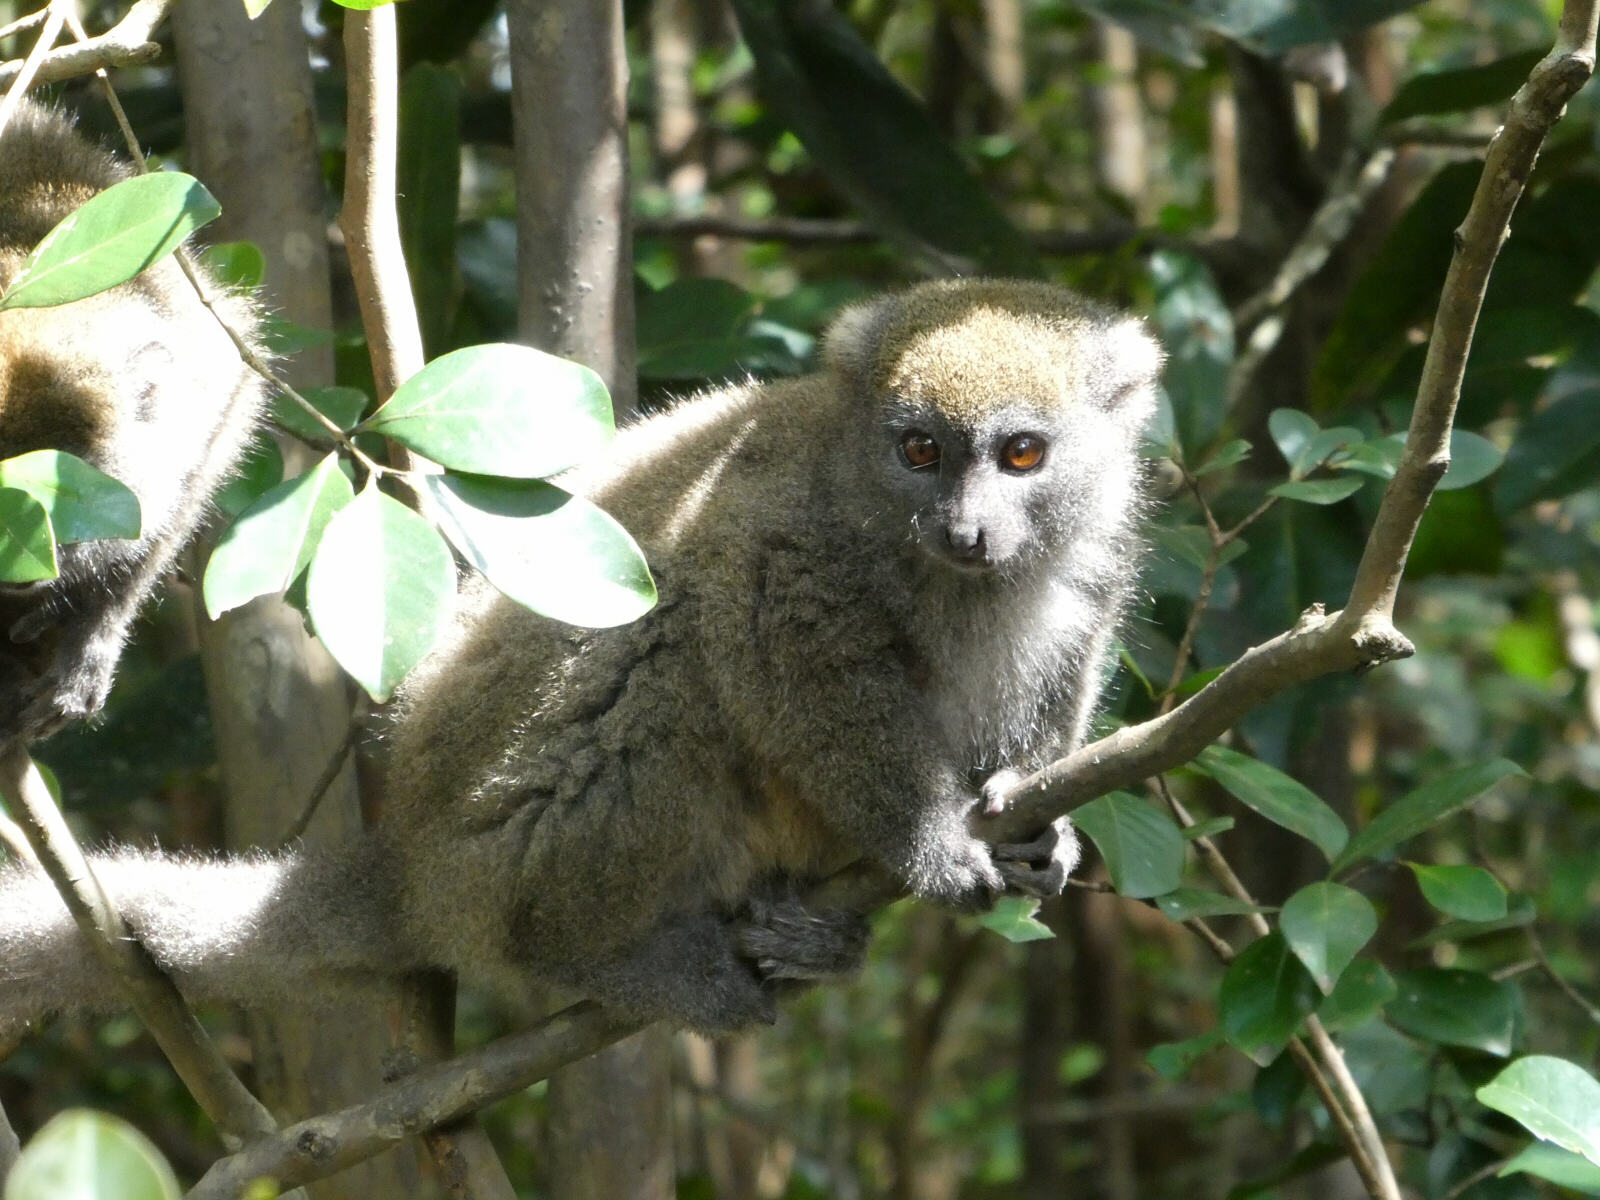 A Bamboo lemur on Lemur Island, Andasibe, Madagascar